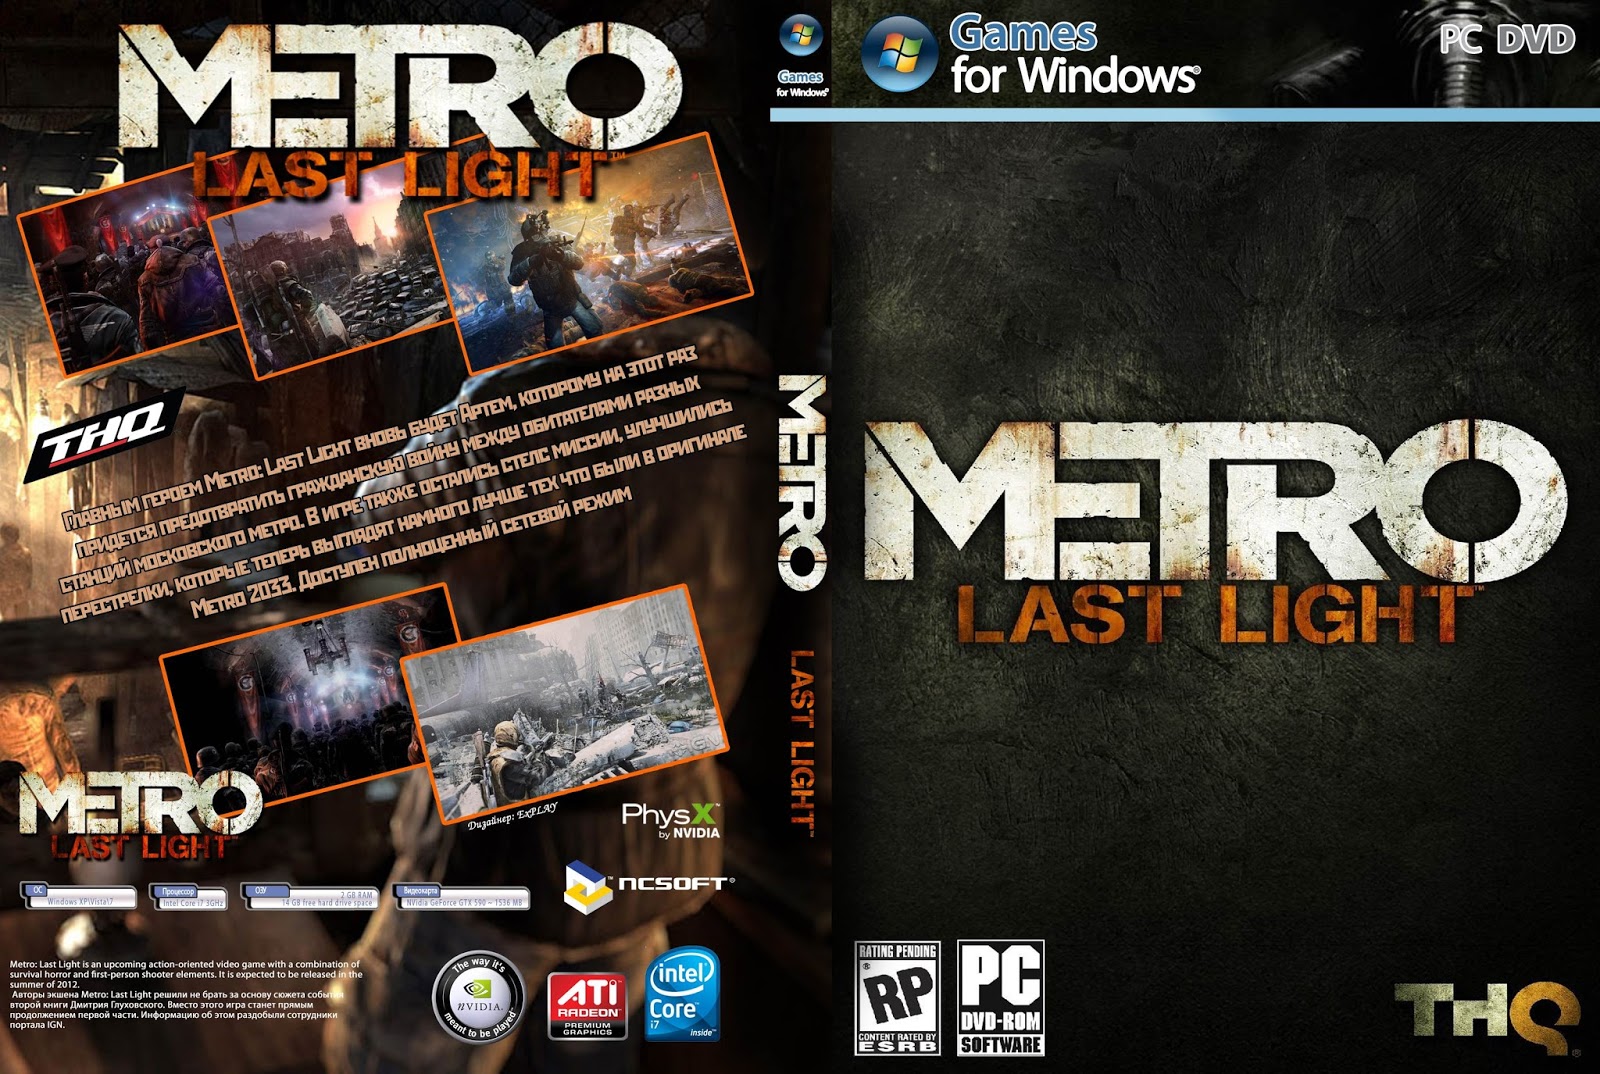 GIGA PC GAME: Metro Last Light Full Free Download